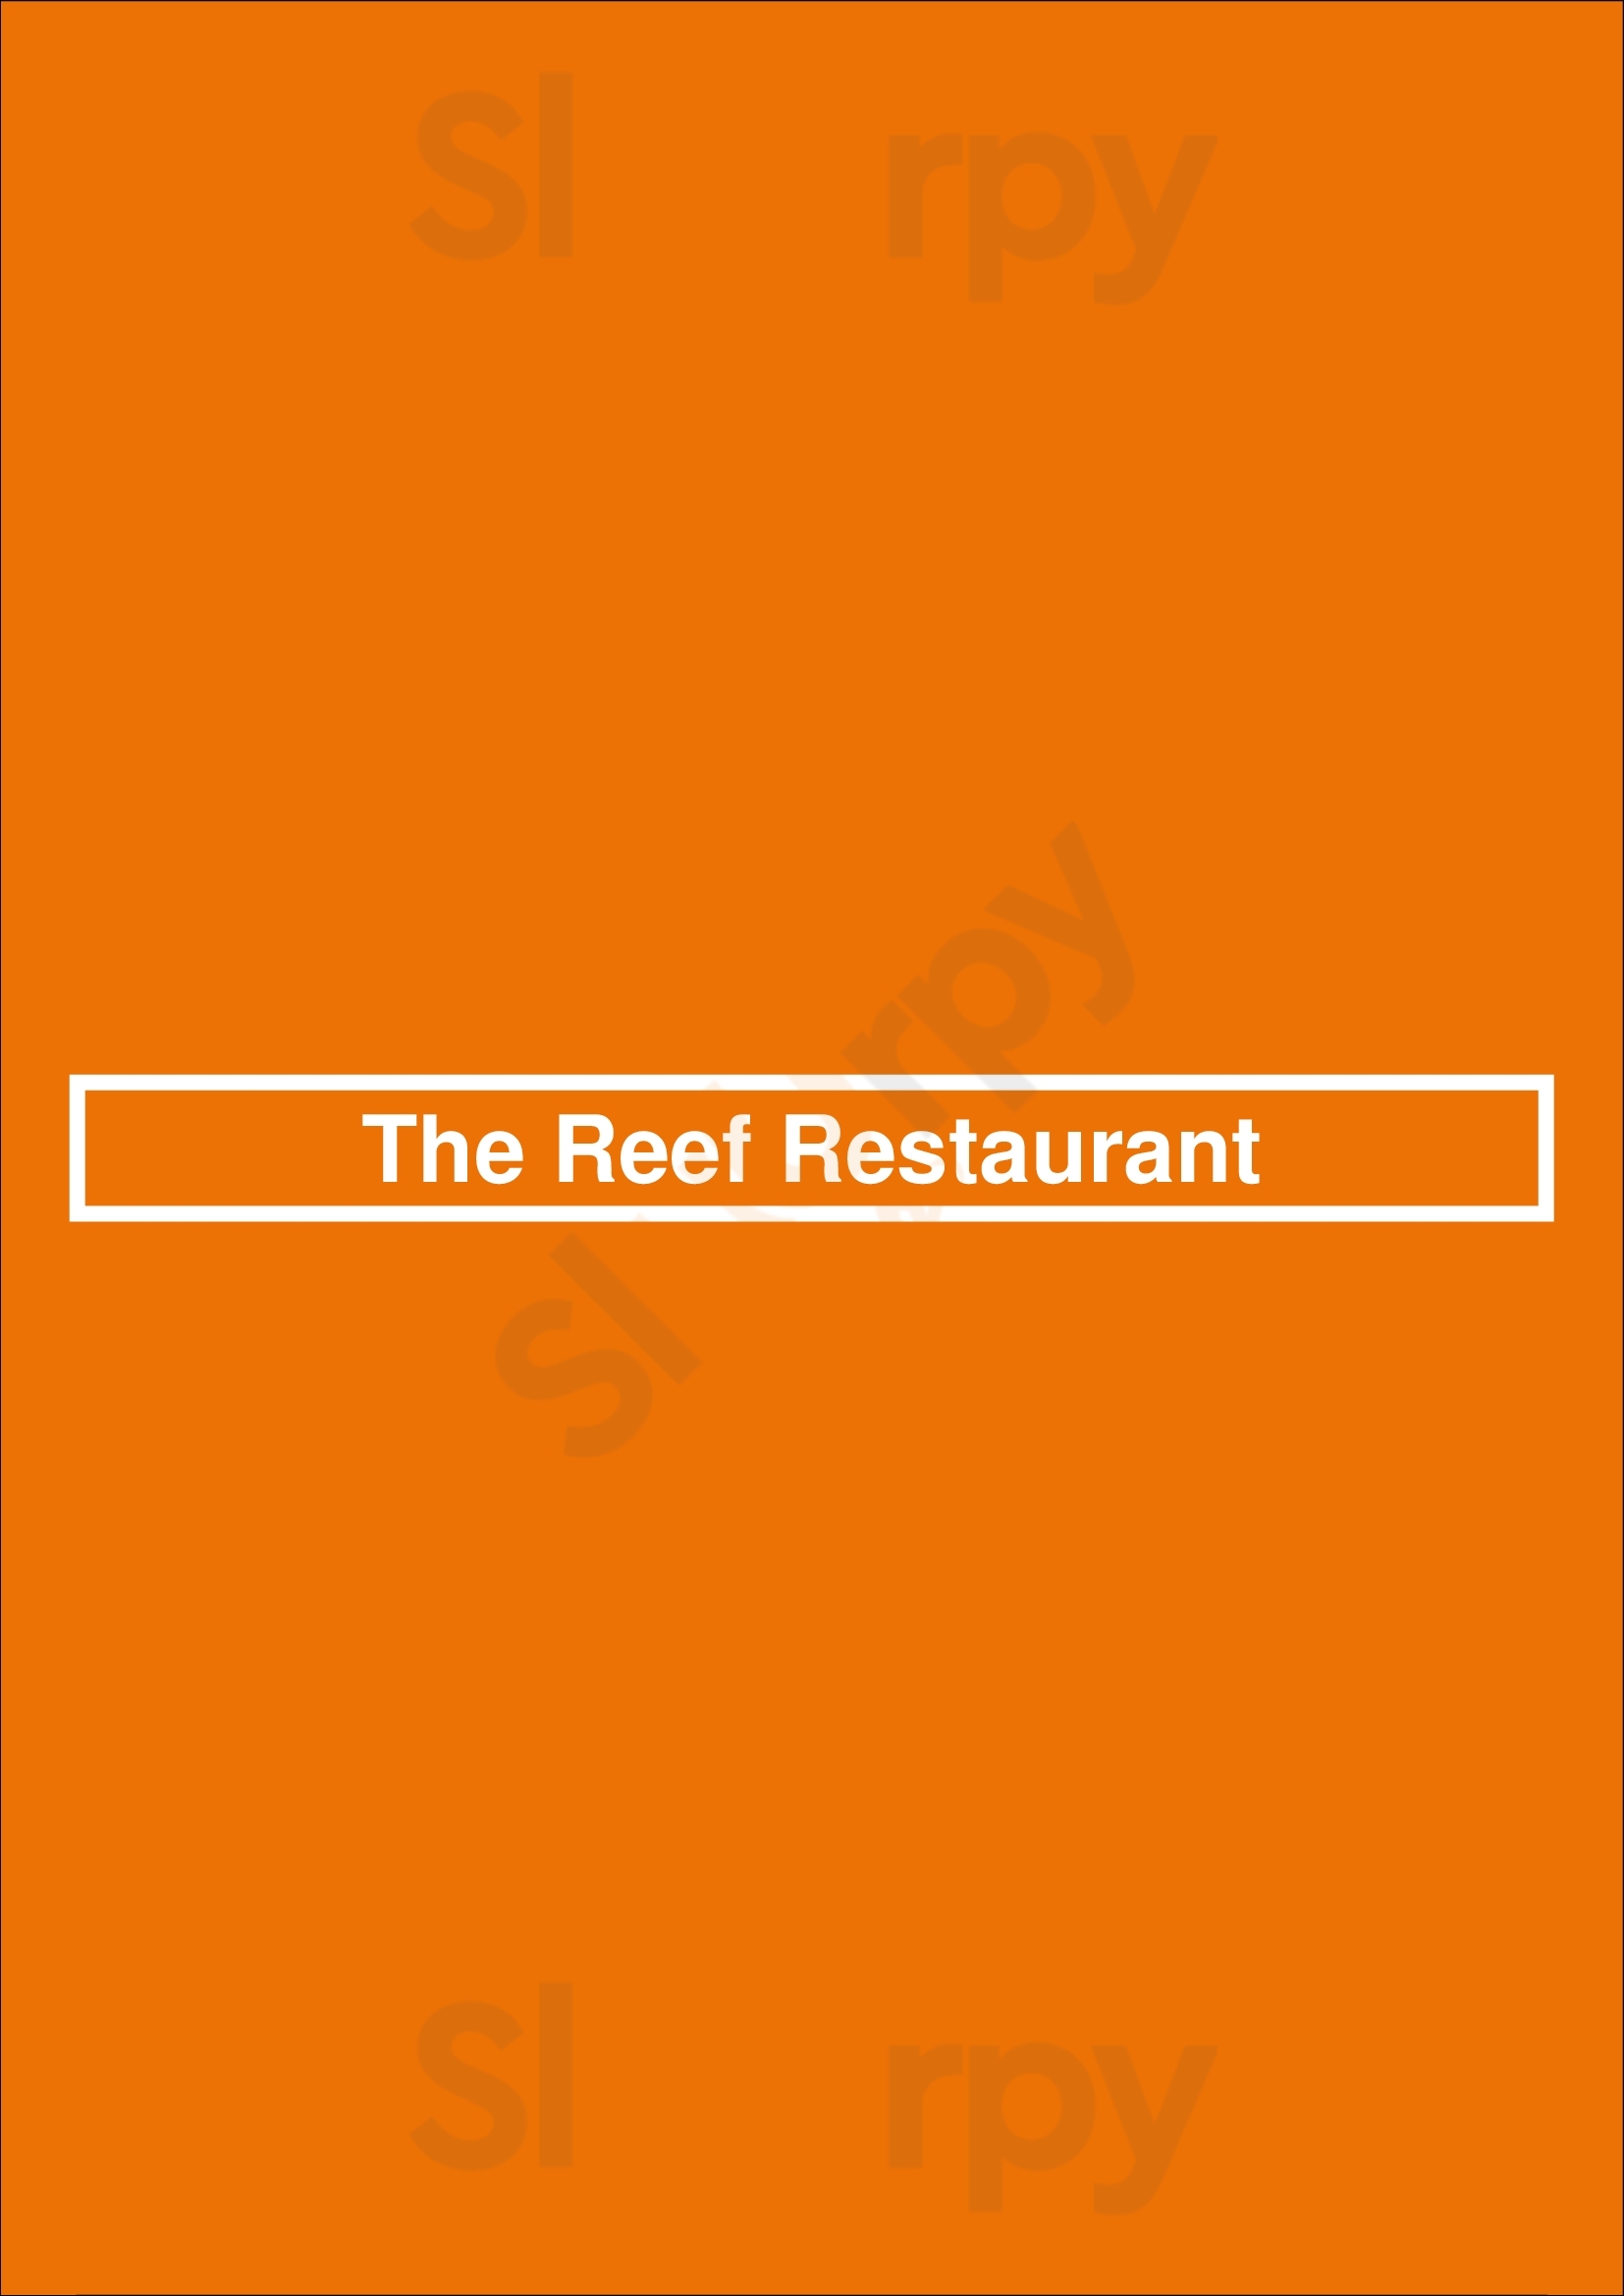 The Reef Restaurant St. Augustine Menu - 1